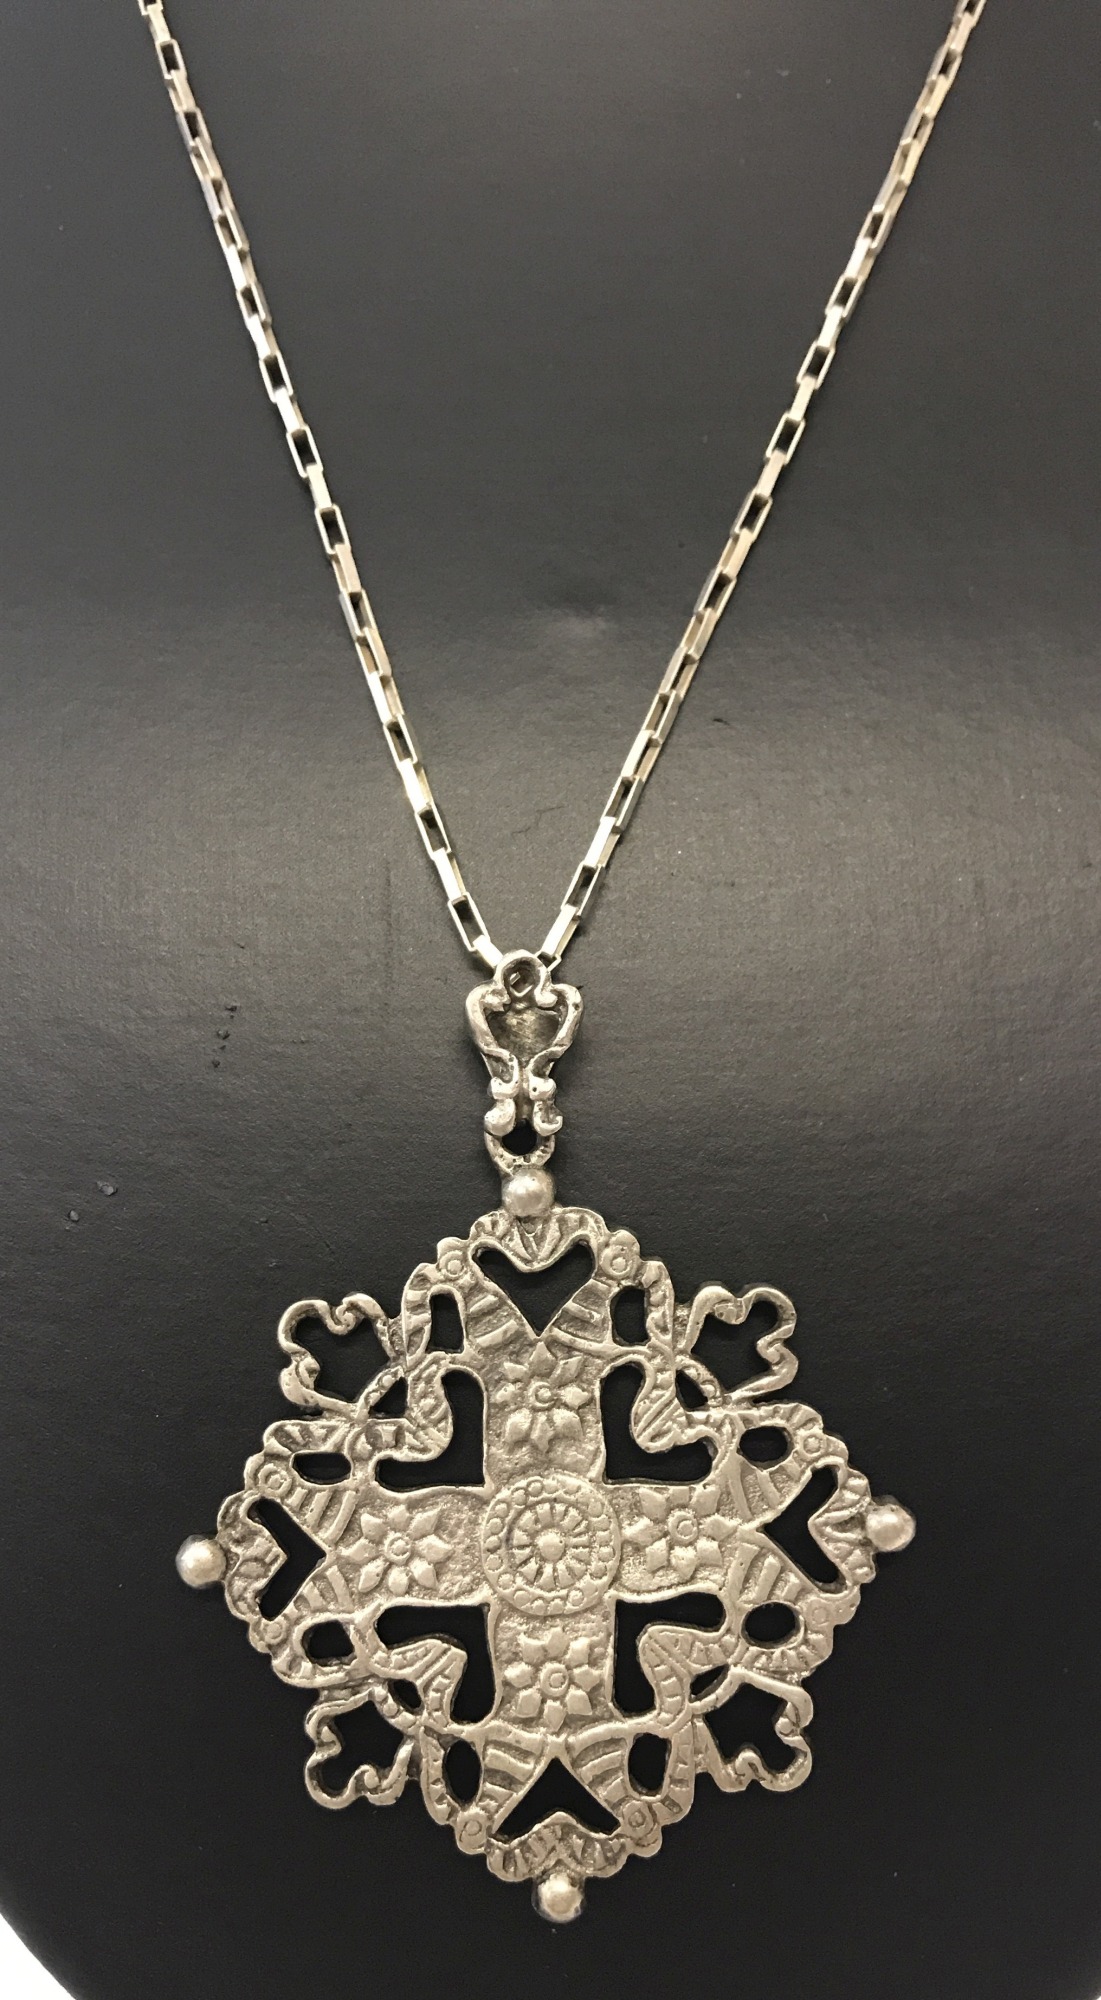 A large decorative pendant by Peruzzi on a 925 silver 24 inch box chain.